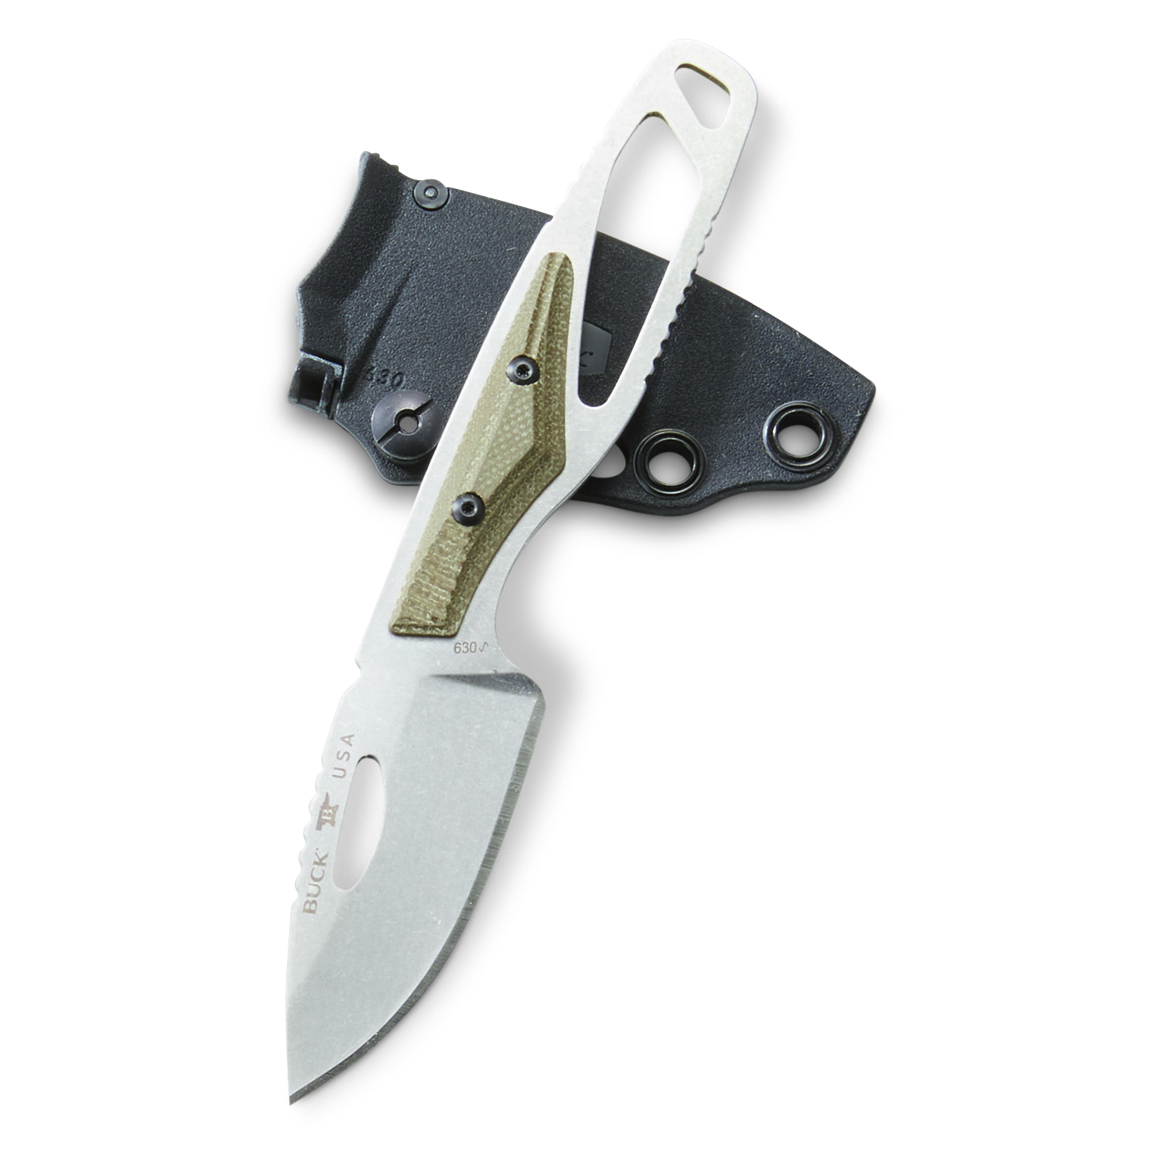 Buck Knives 630 Paklite Hide Pro Knife, Olive Drab Micarta